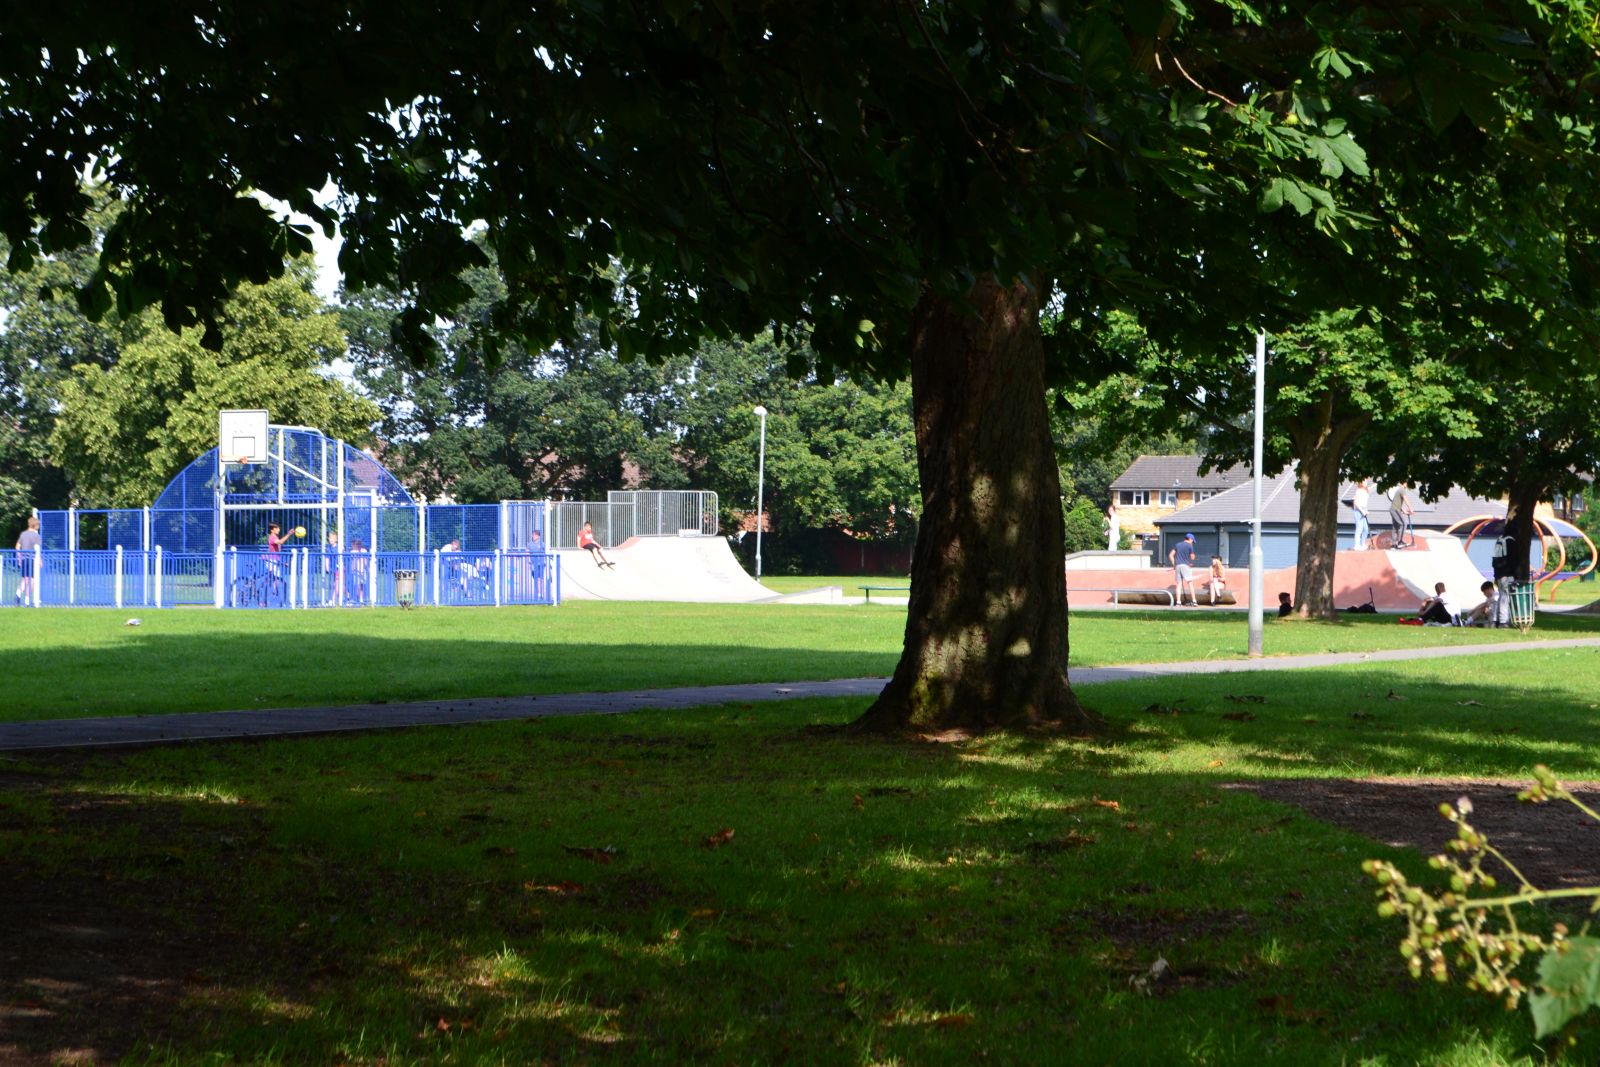 Photograph of Horley Recreation Ground